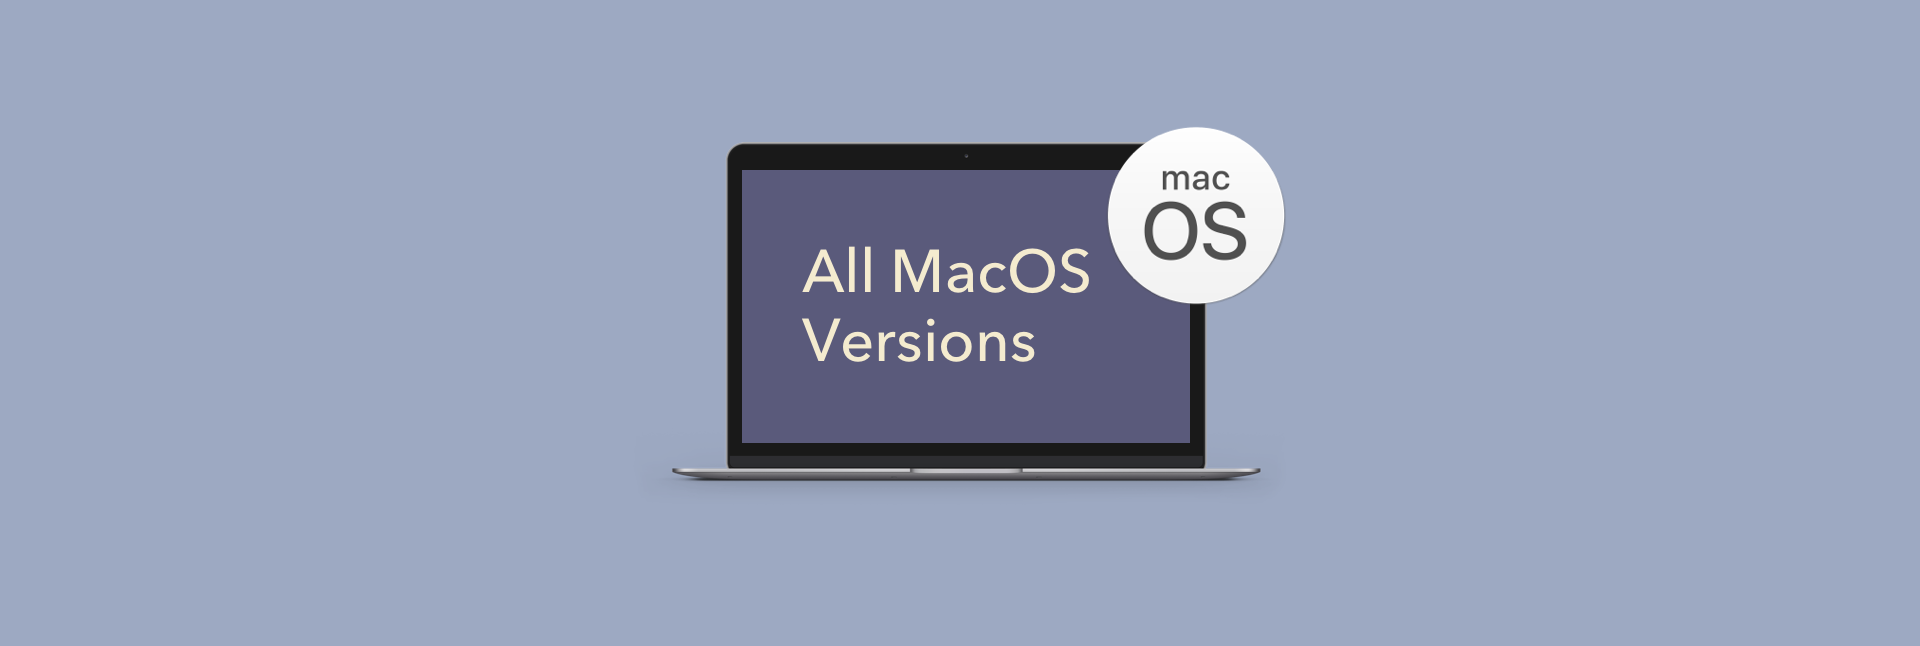 latest mac os list of versions